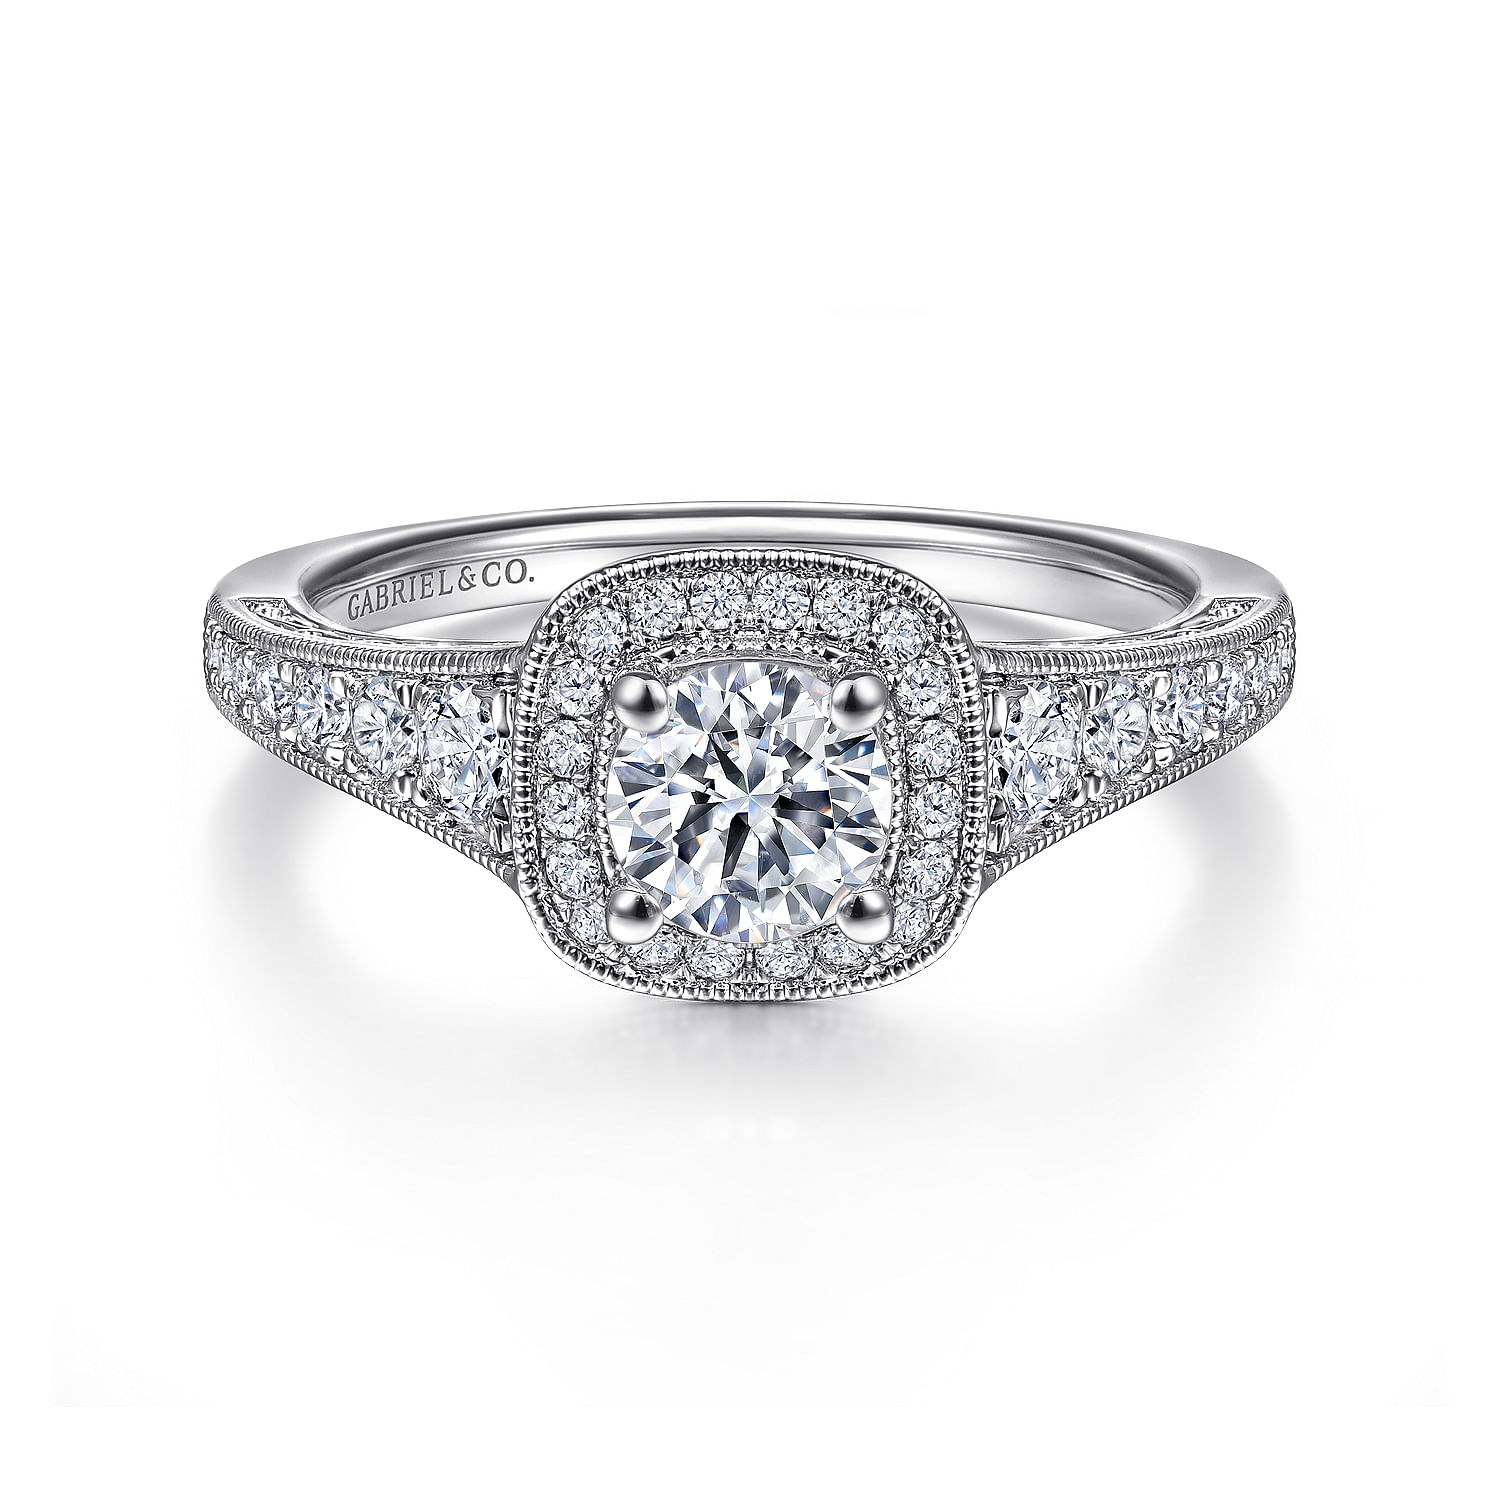 Florence - Vintage Inspired 14K White Gold Round Halo Diamond Engagement Ring